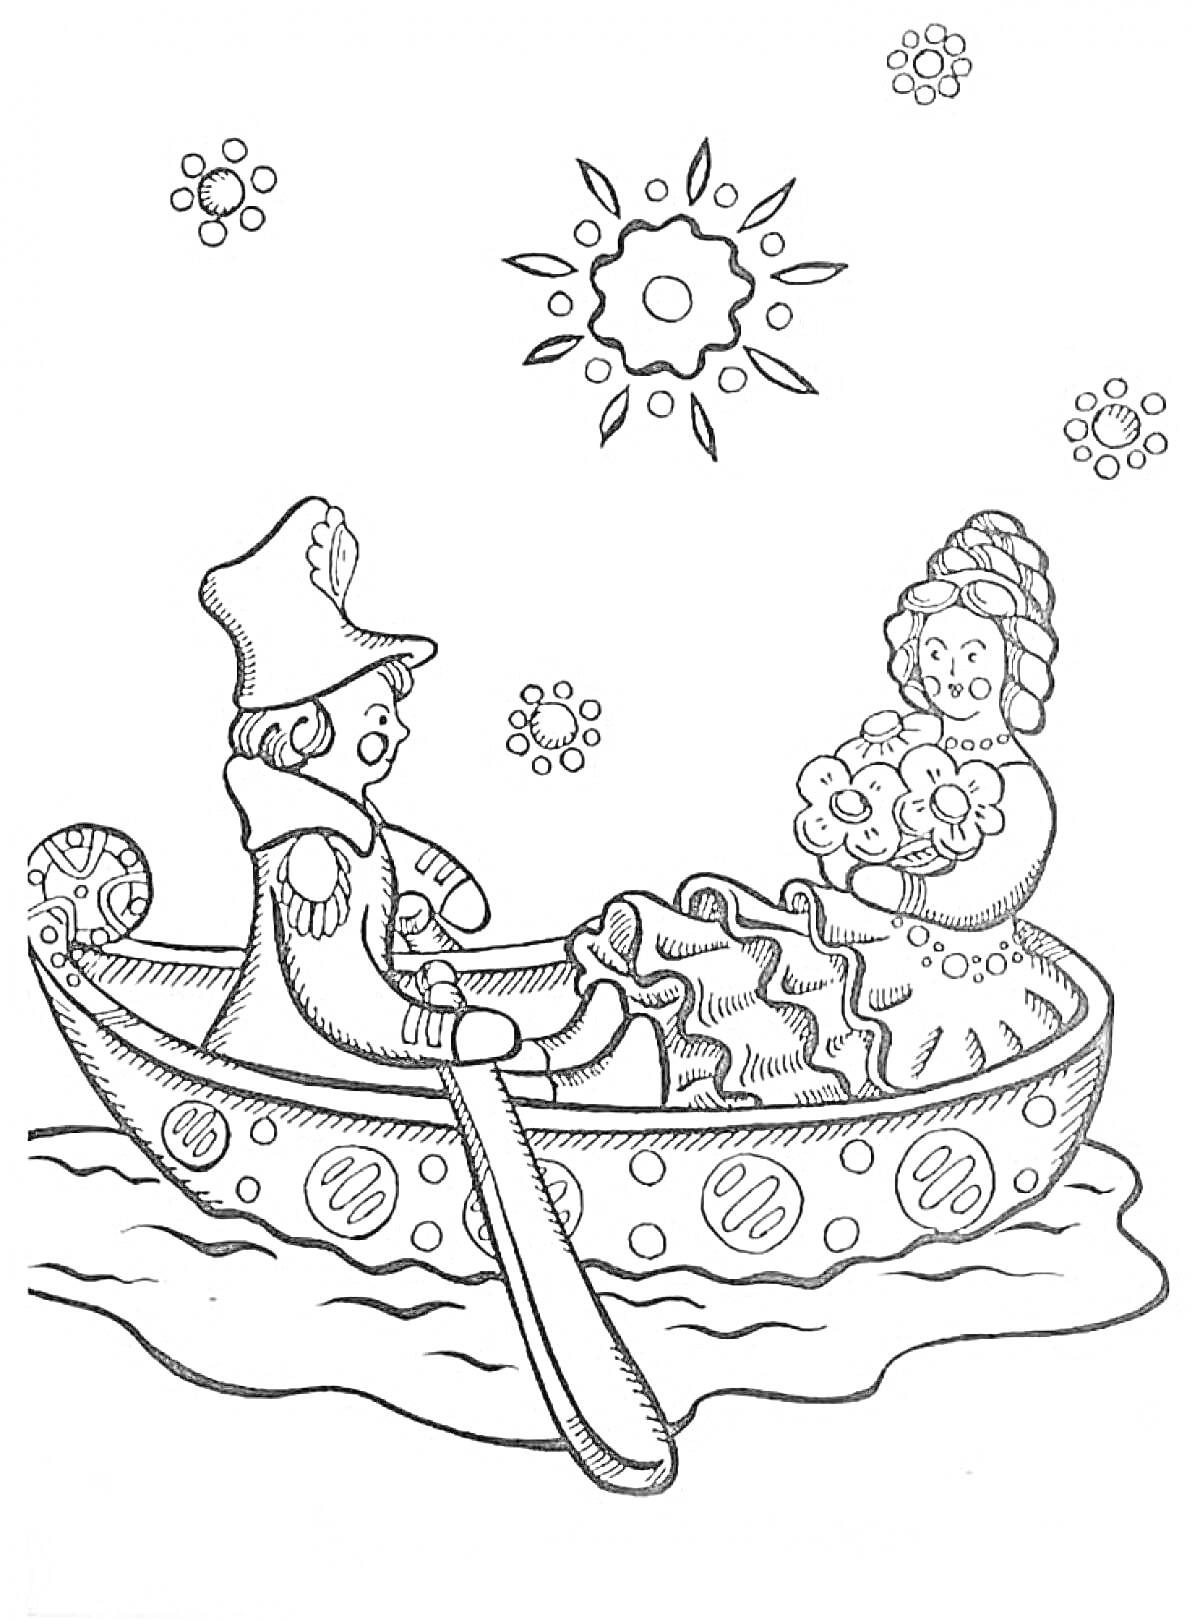 Раскраска Мужчина в шляпе и женщина в лодке с узором на воде